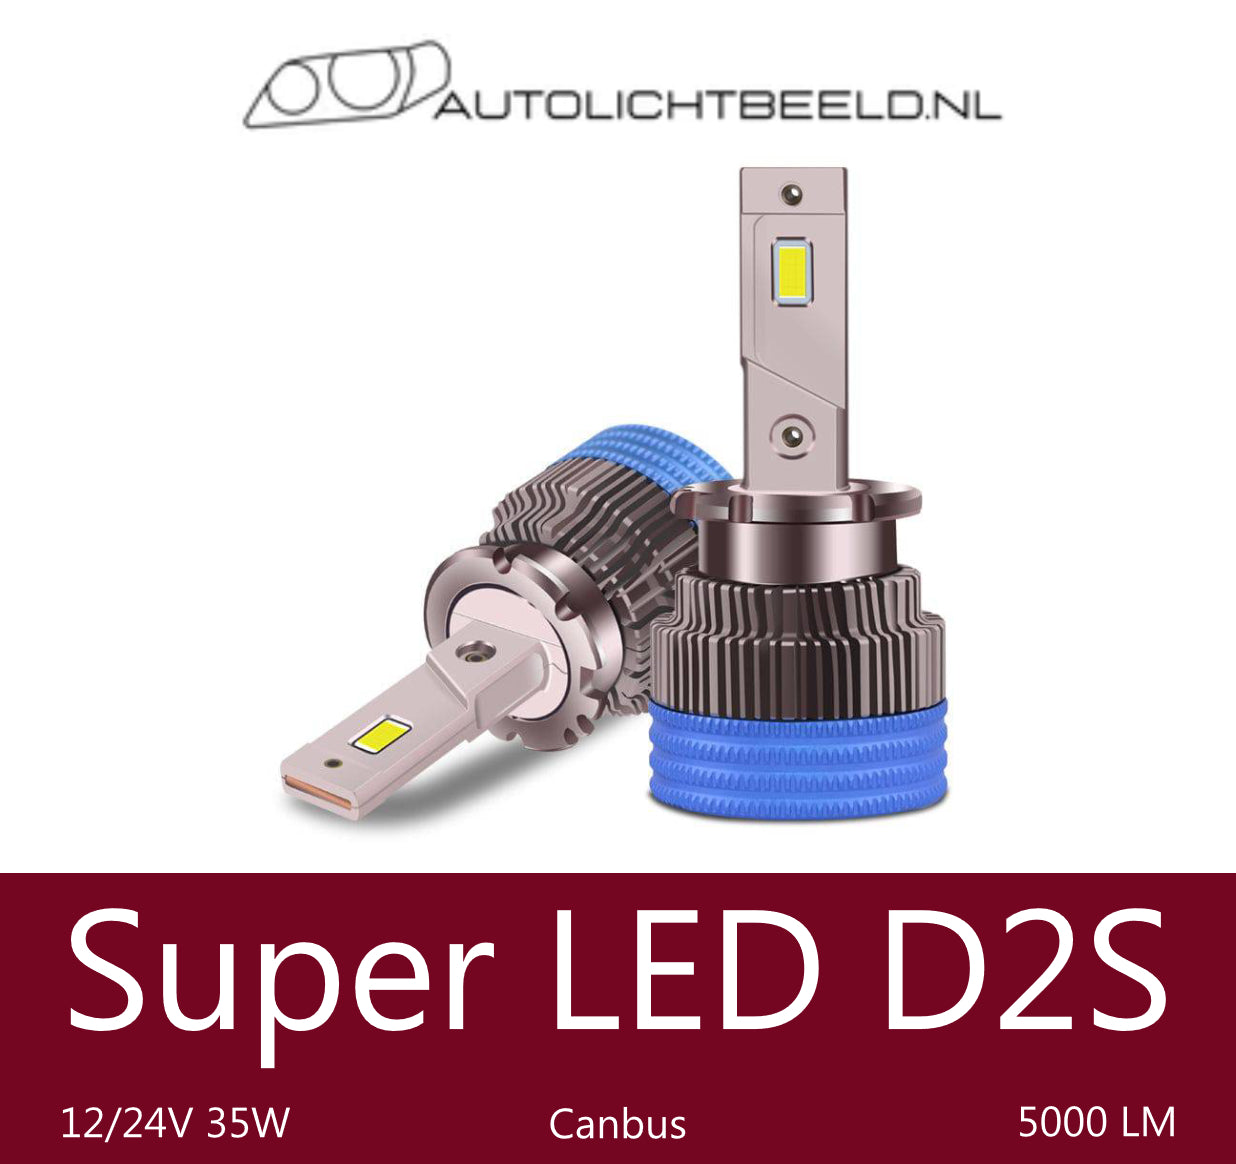 D2S Super LED - Autolichtbeeld